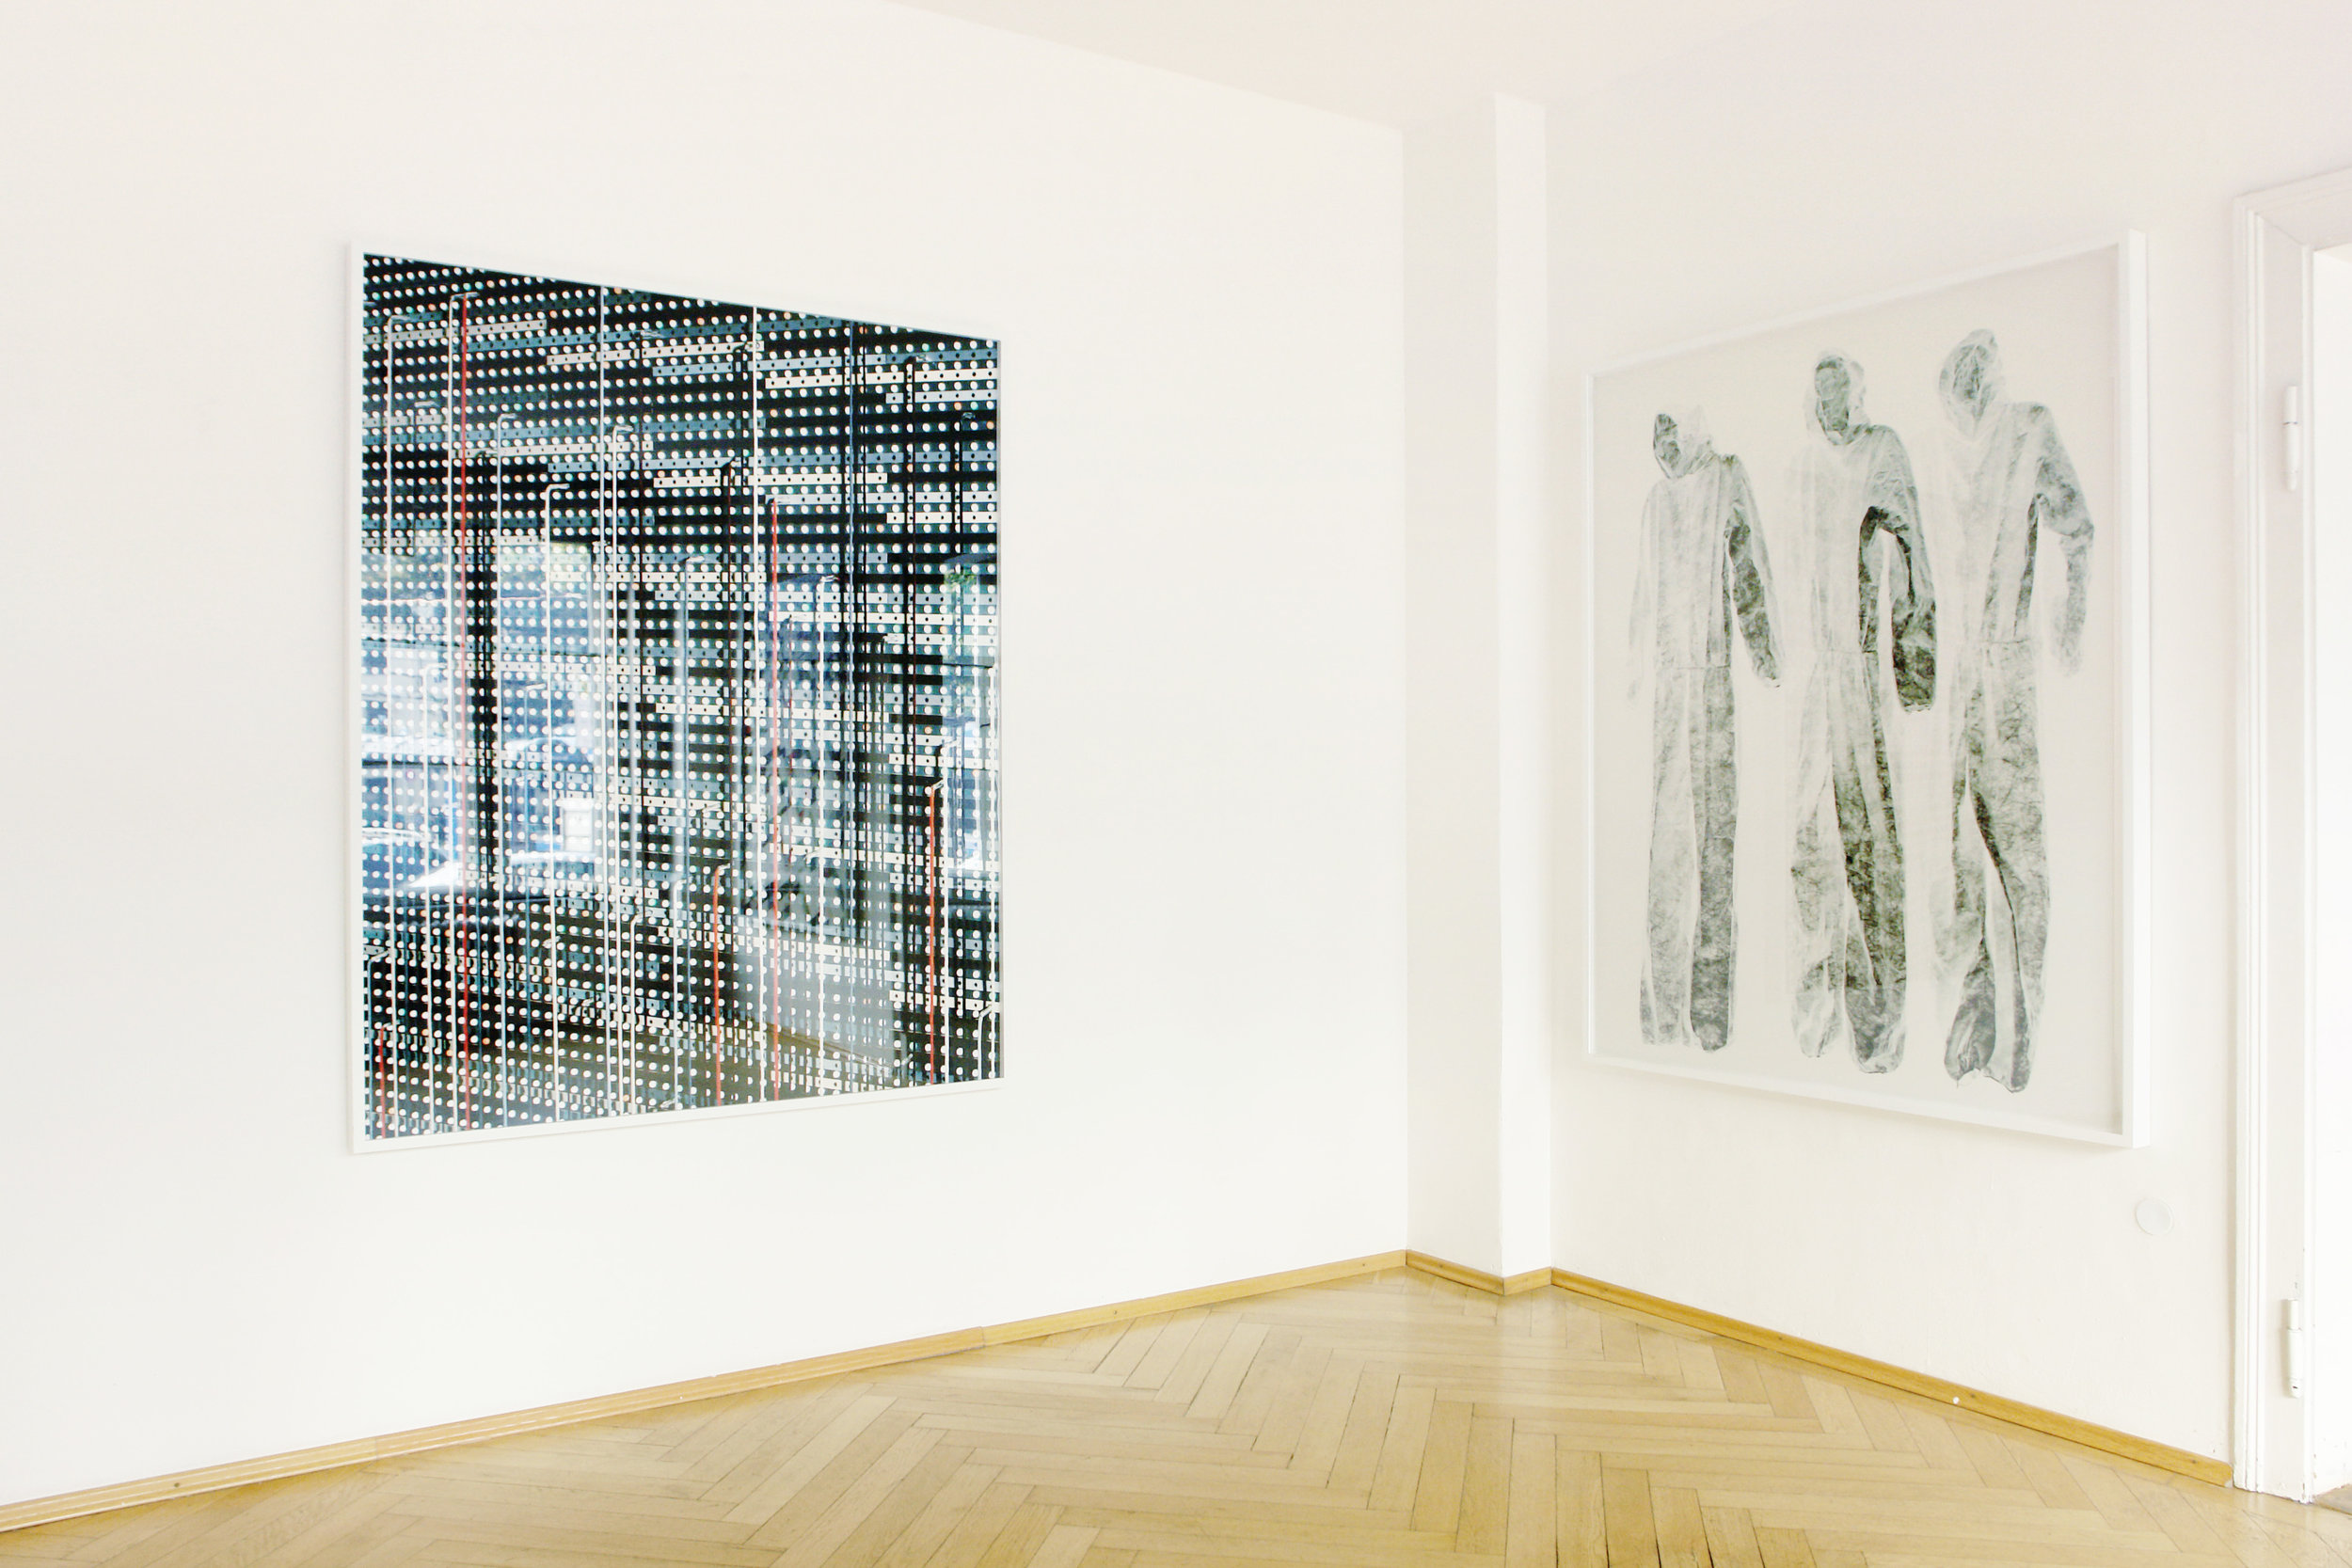   Sonja Braas: A Survey   2016 Gallery Tanit, Munich    